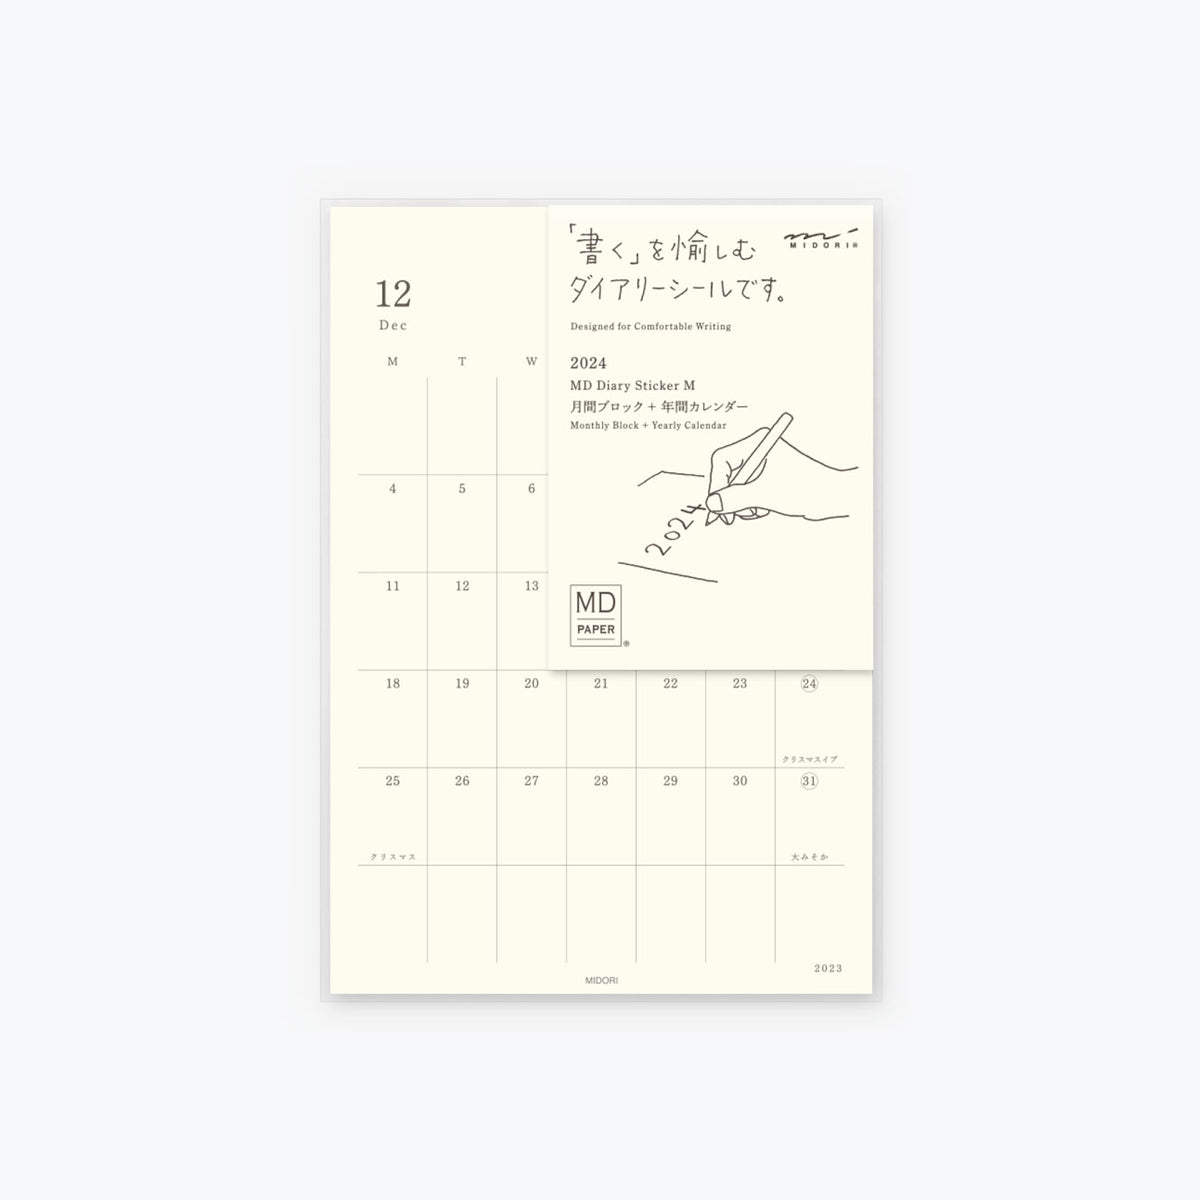 Midori - 2025 Diary - MD Diary Sticker [M]